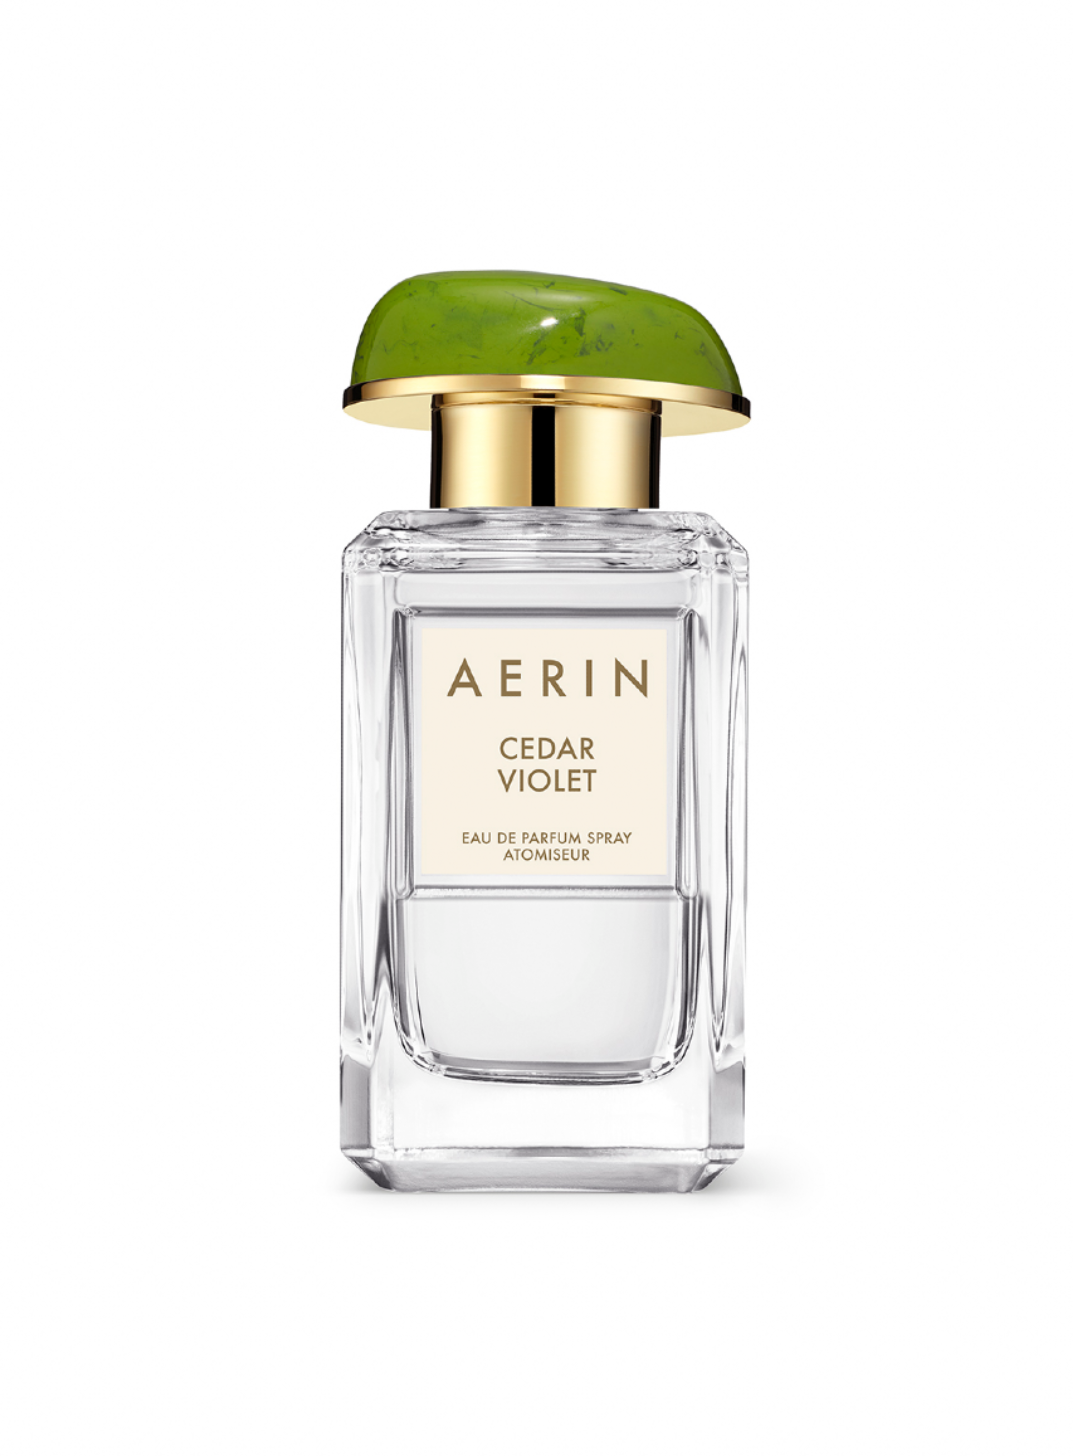 Cedar Violet perfume by Aerin Lauder